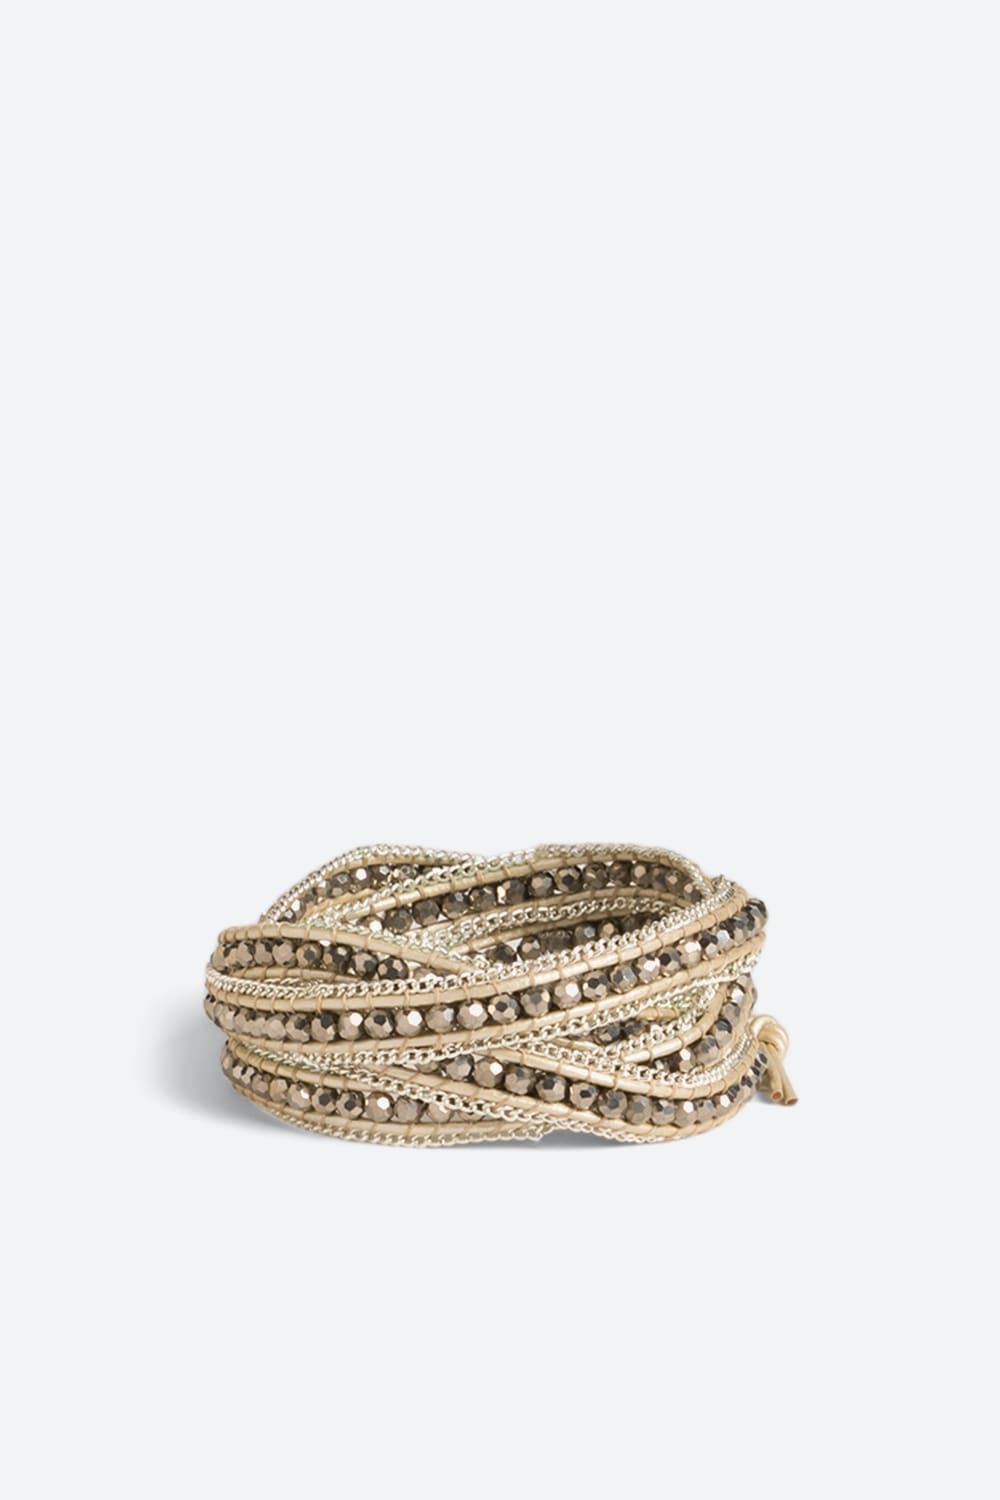 Ashley Crystal Wrap Bracelet | Stitch Fix